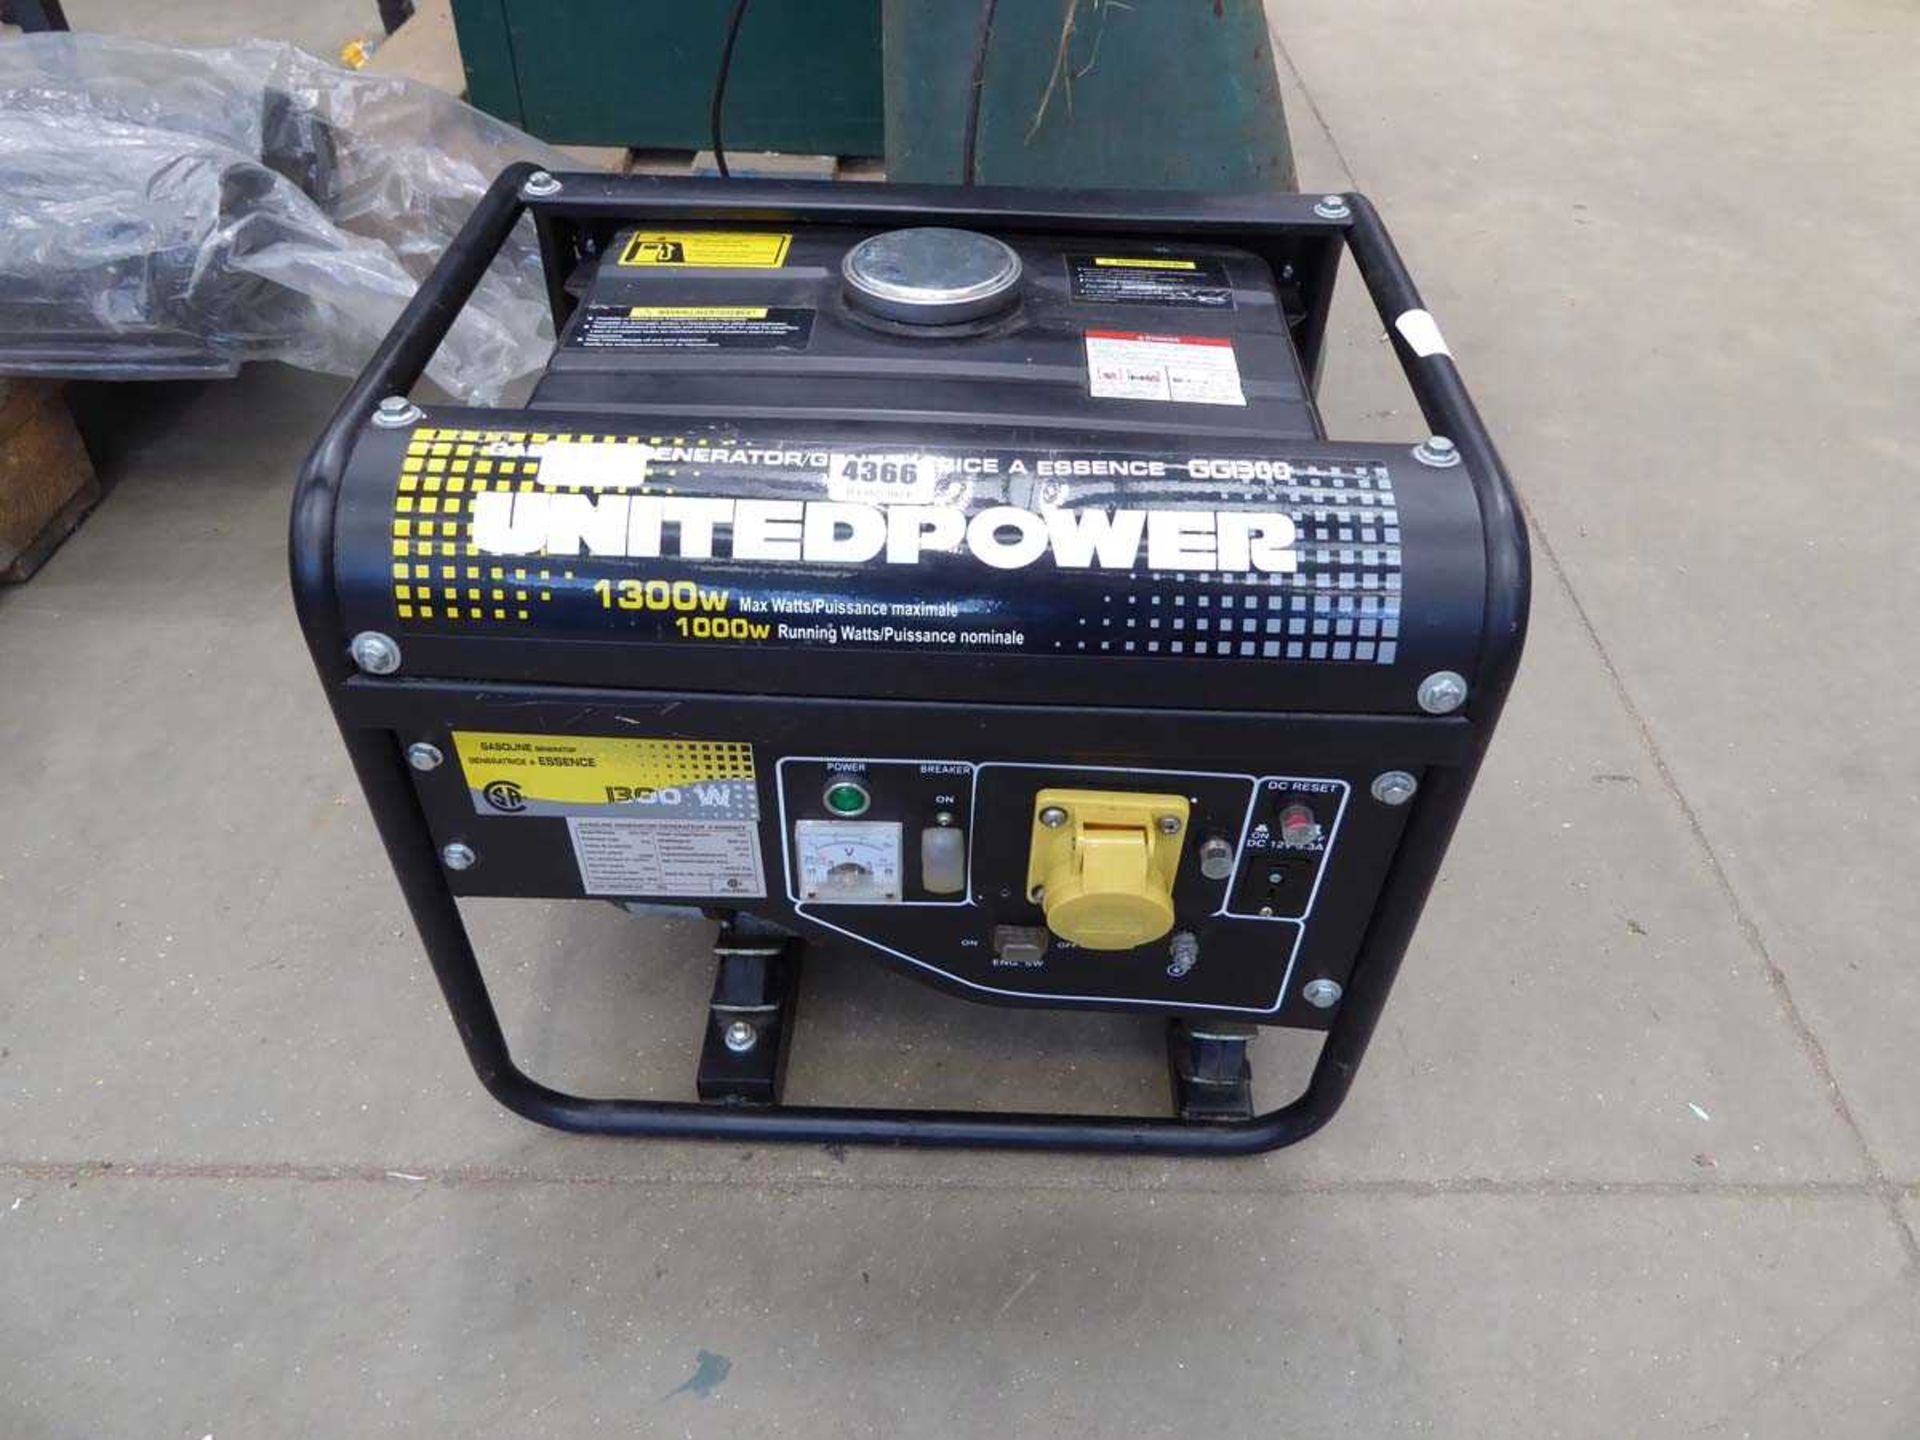 United Power 1300W generator